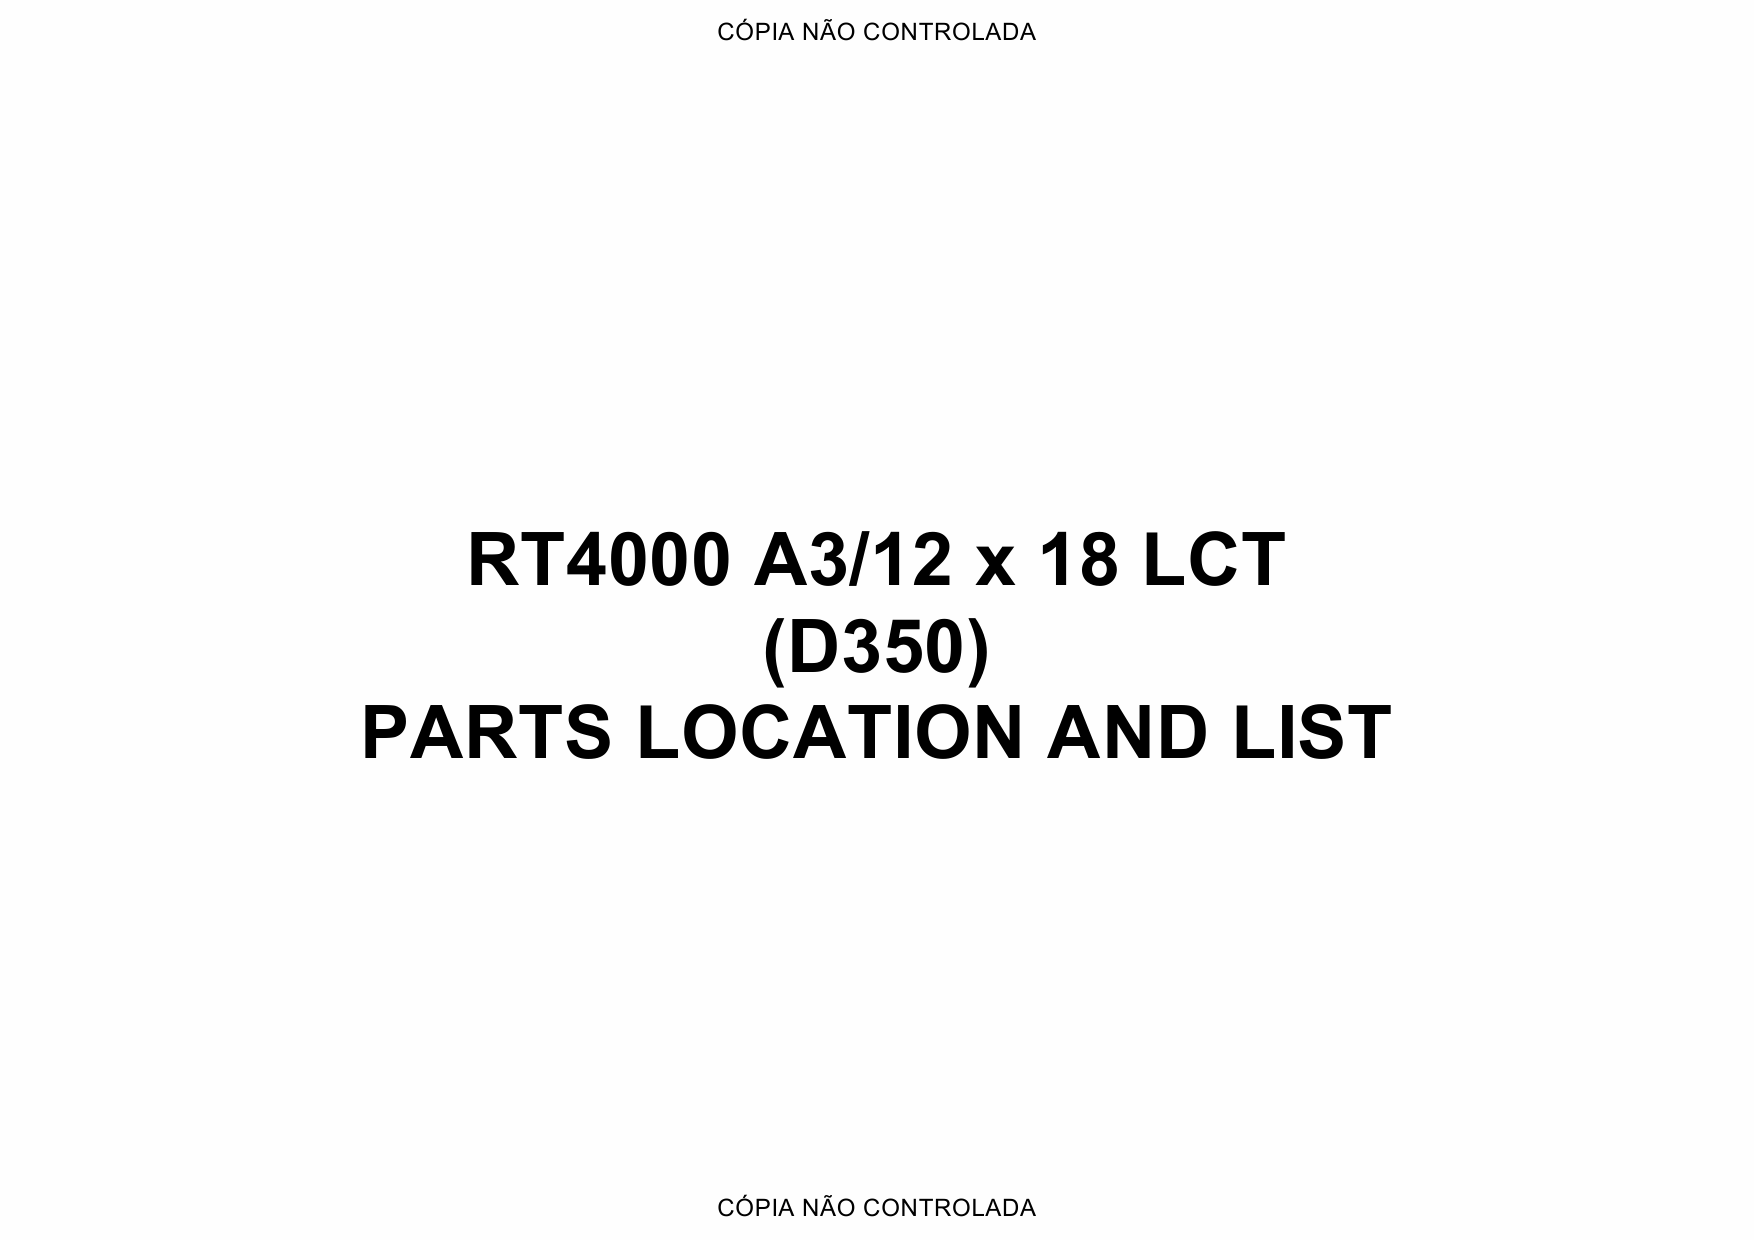 RICOH Options D350 RT4000-A3 Parts Catalog PDF download-1